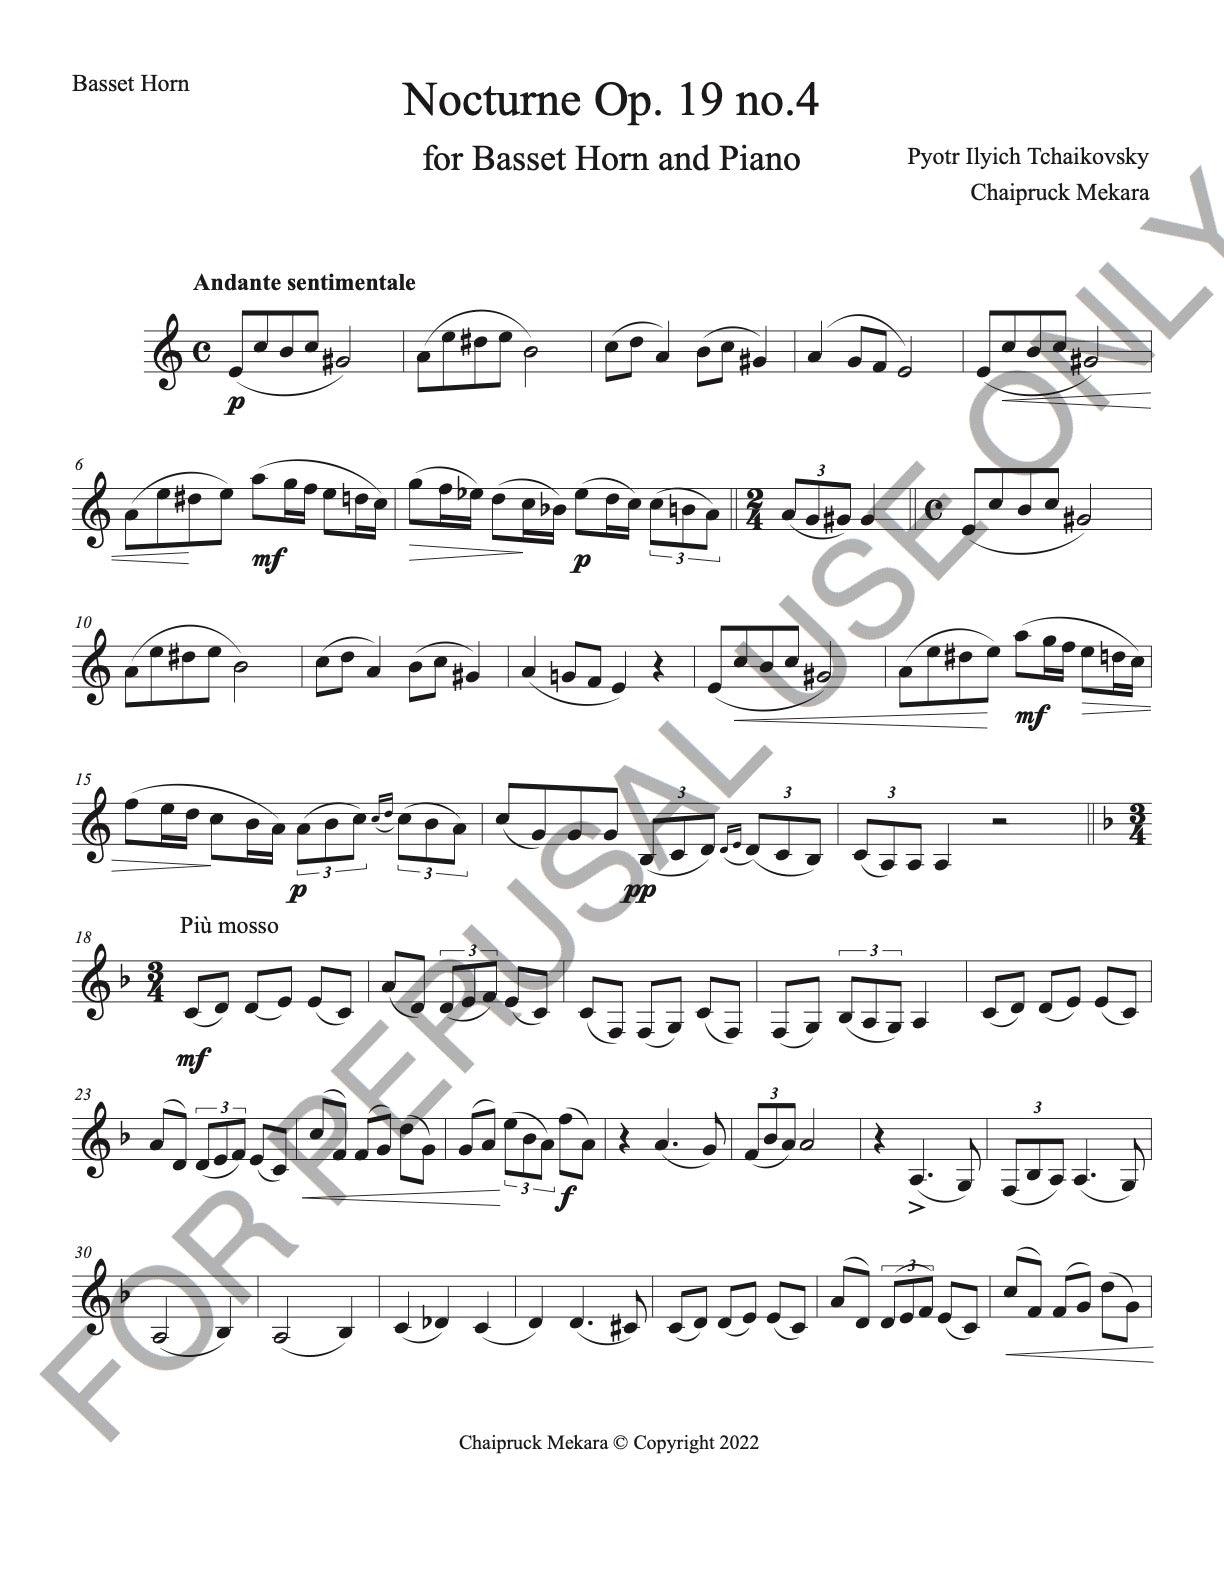 Basset Horn and Piano sheet music: Tchaikovsky's Nocturne, Op. 19 - ChaipruckMekara